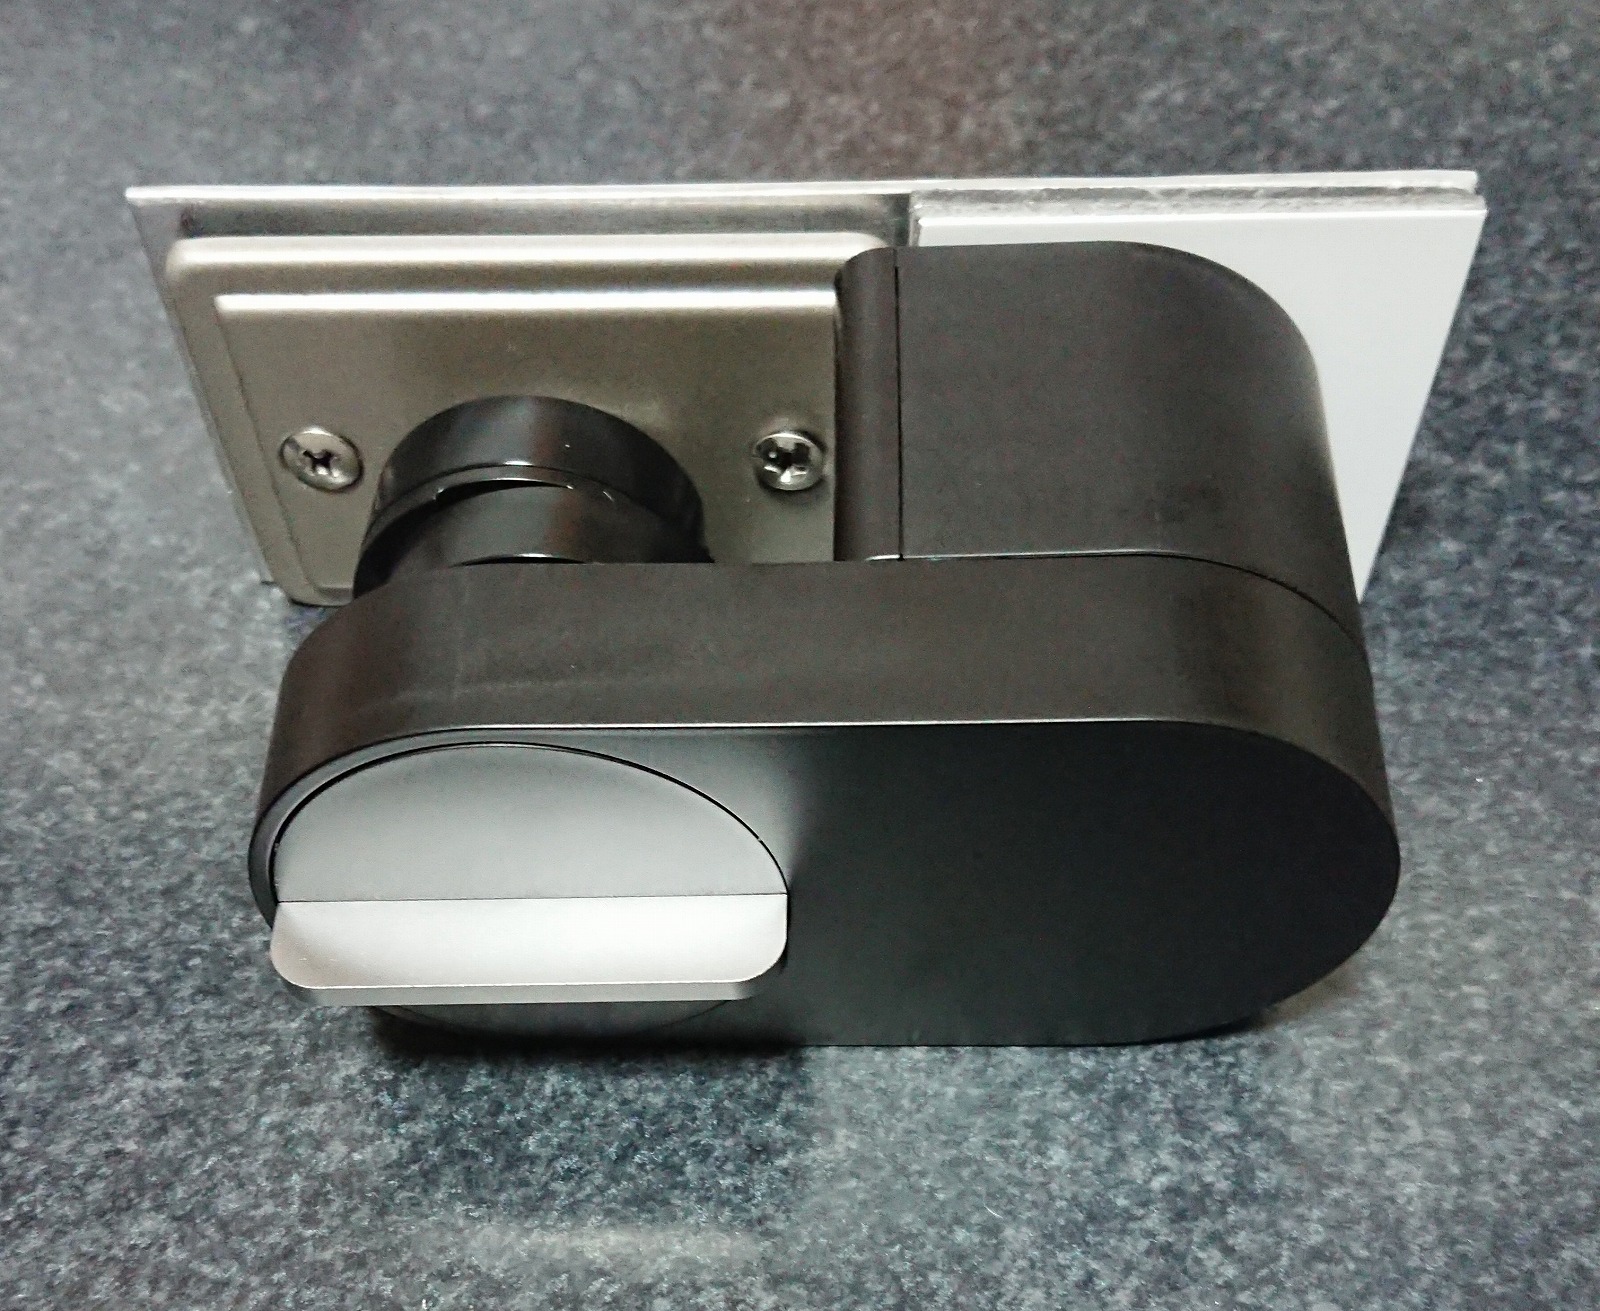 Qrio Lock Q-SL2を両面テープ貼りつけではなく、ねじ止め固定する。 | 12volt.jp